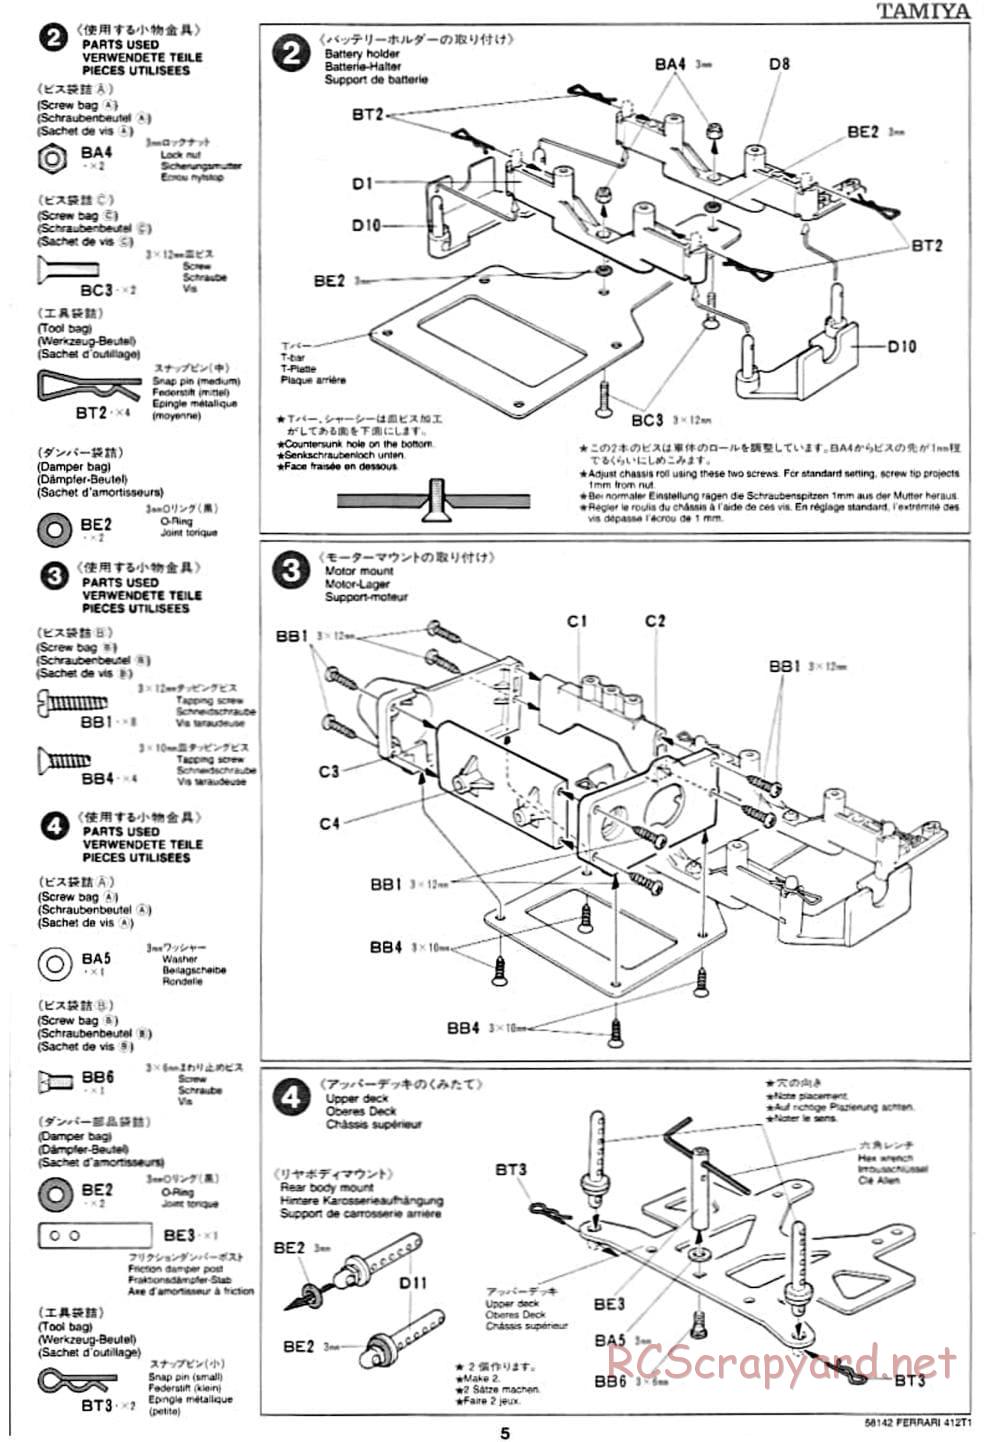 Tamiya - Ferrari 412T1 - F103 Chassis - Manual - Page 5